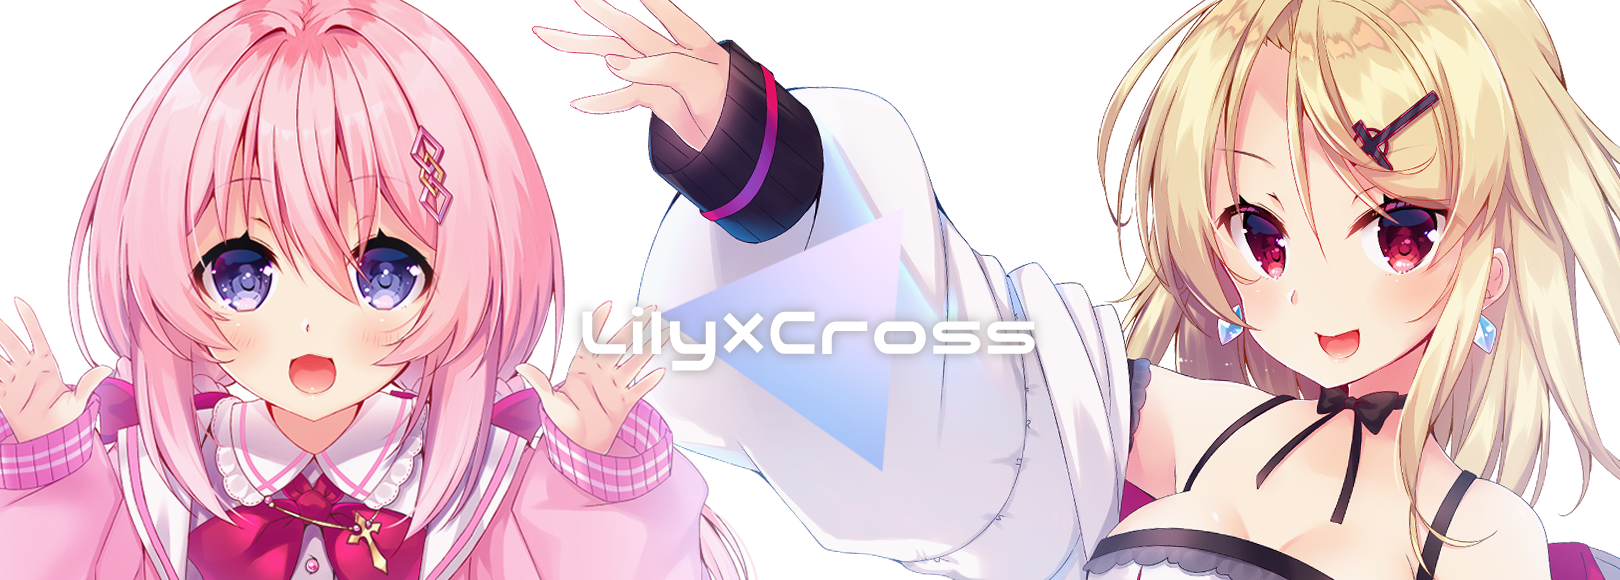 Lily×Cross